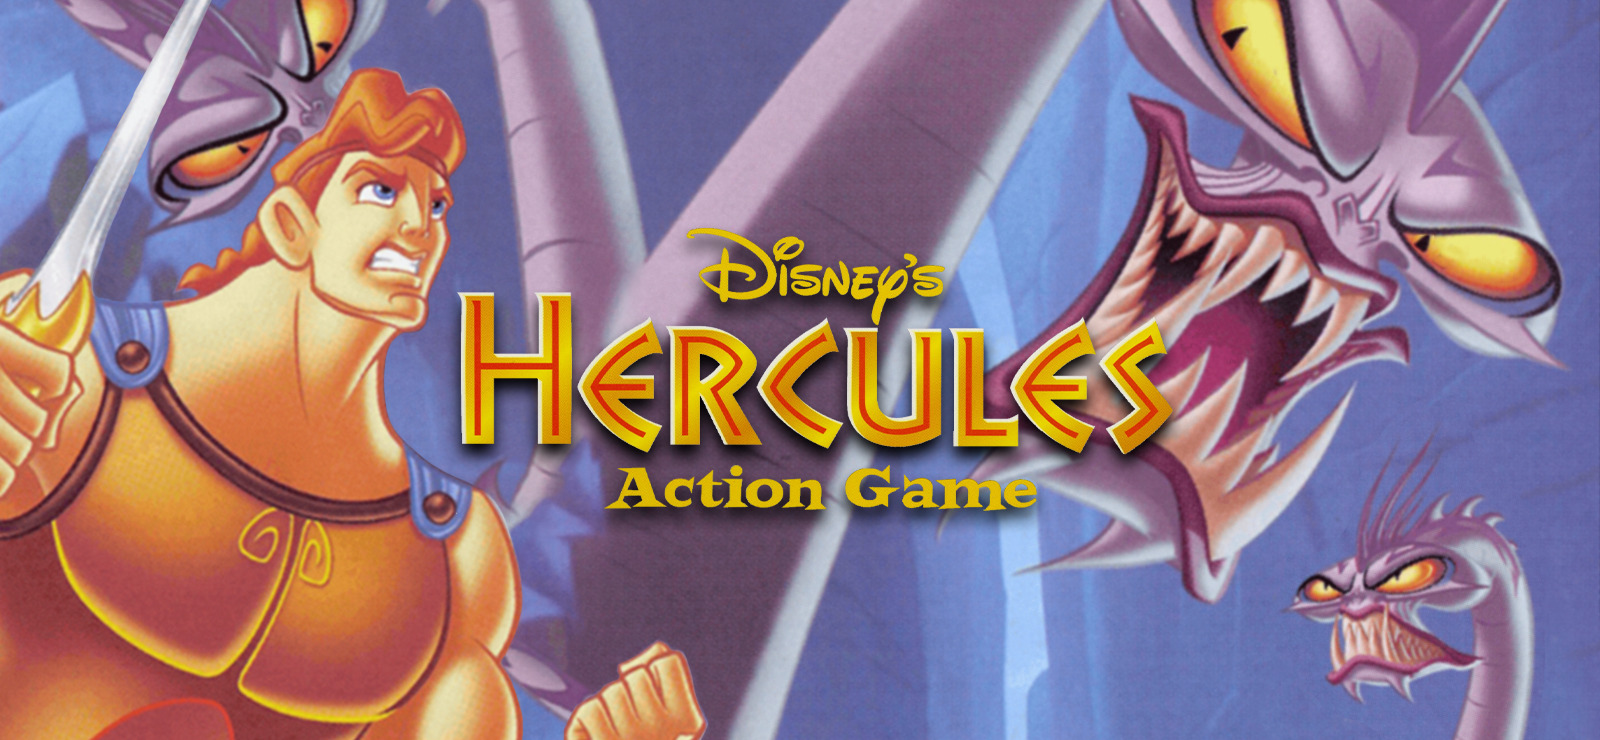 Disney's Hercules on 